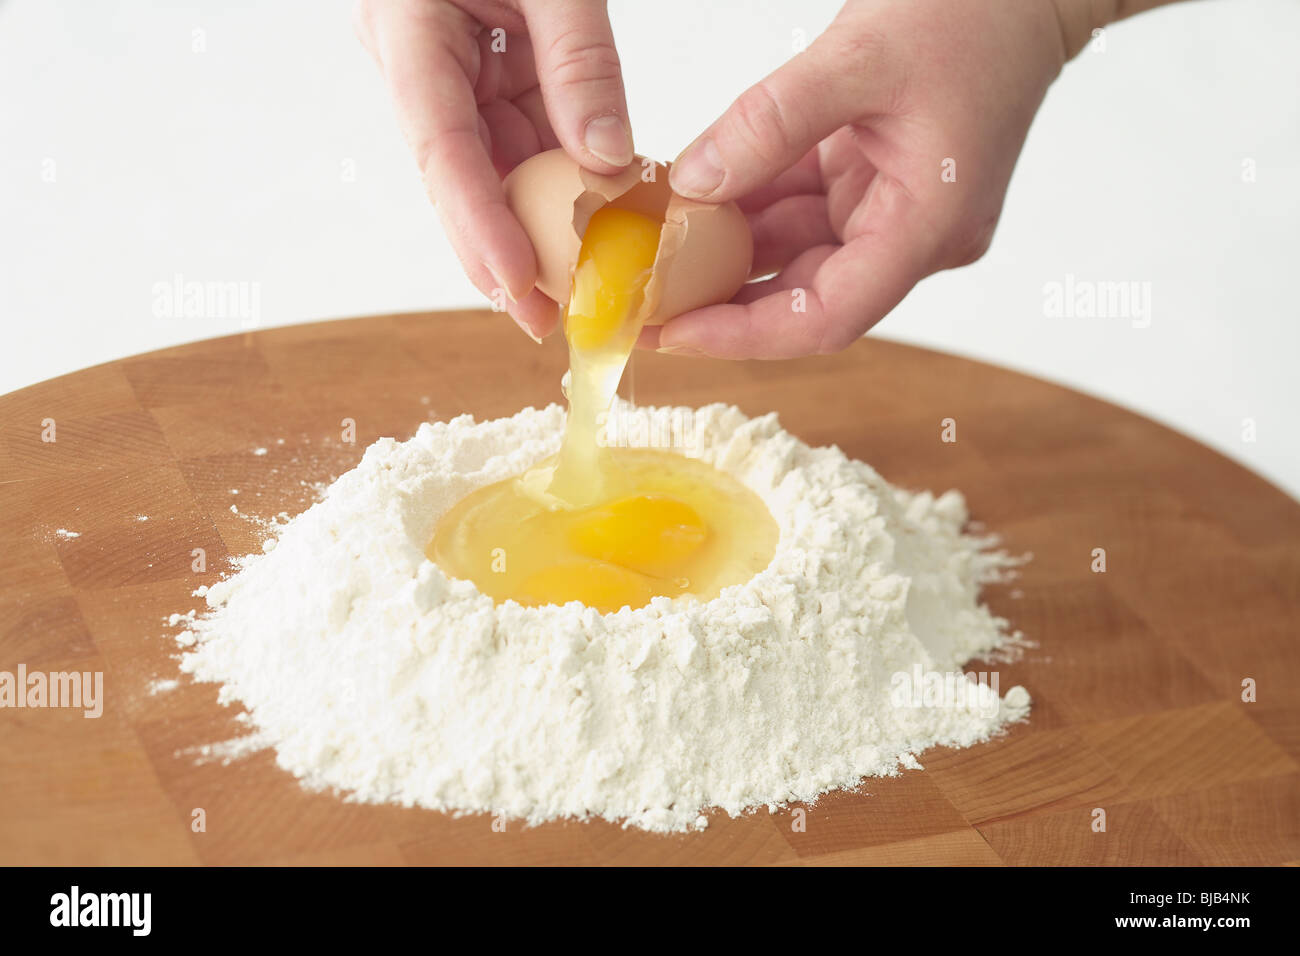 breaking egg into pasta ingredients Stock Photo